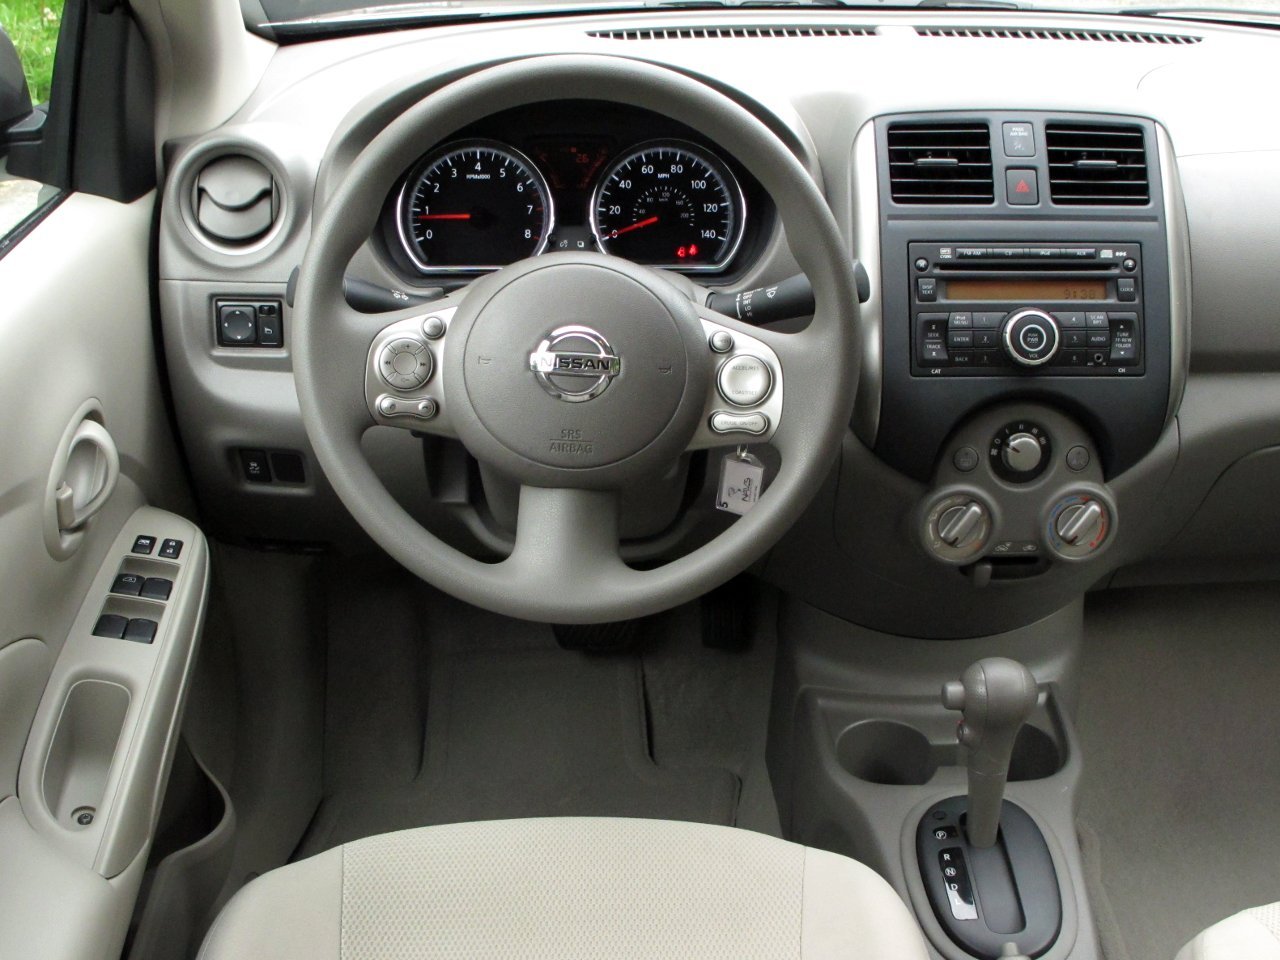 2012 Nissan Versa Sedan review and test drive